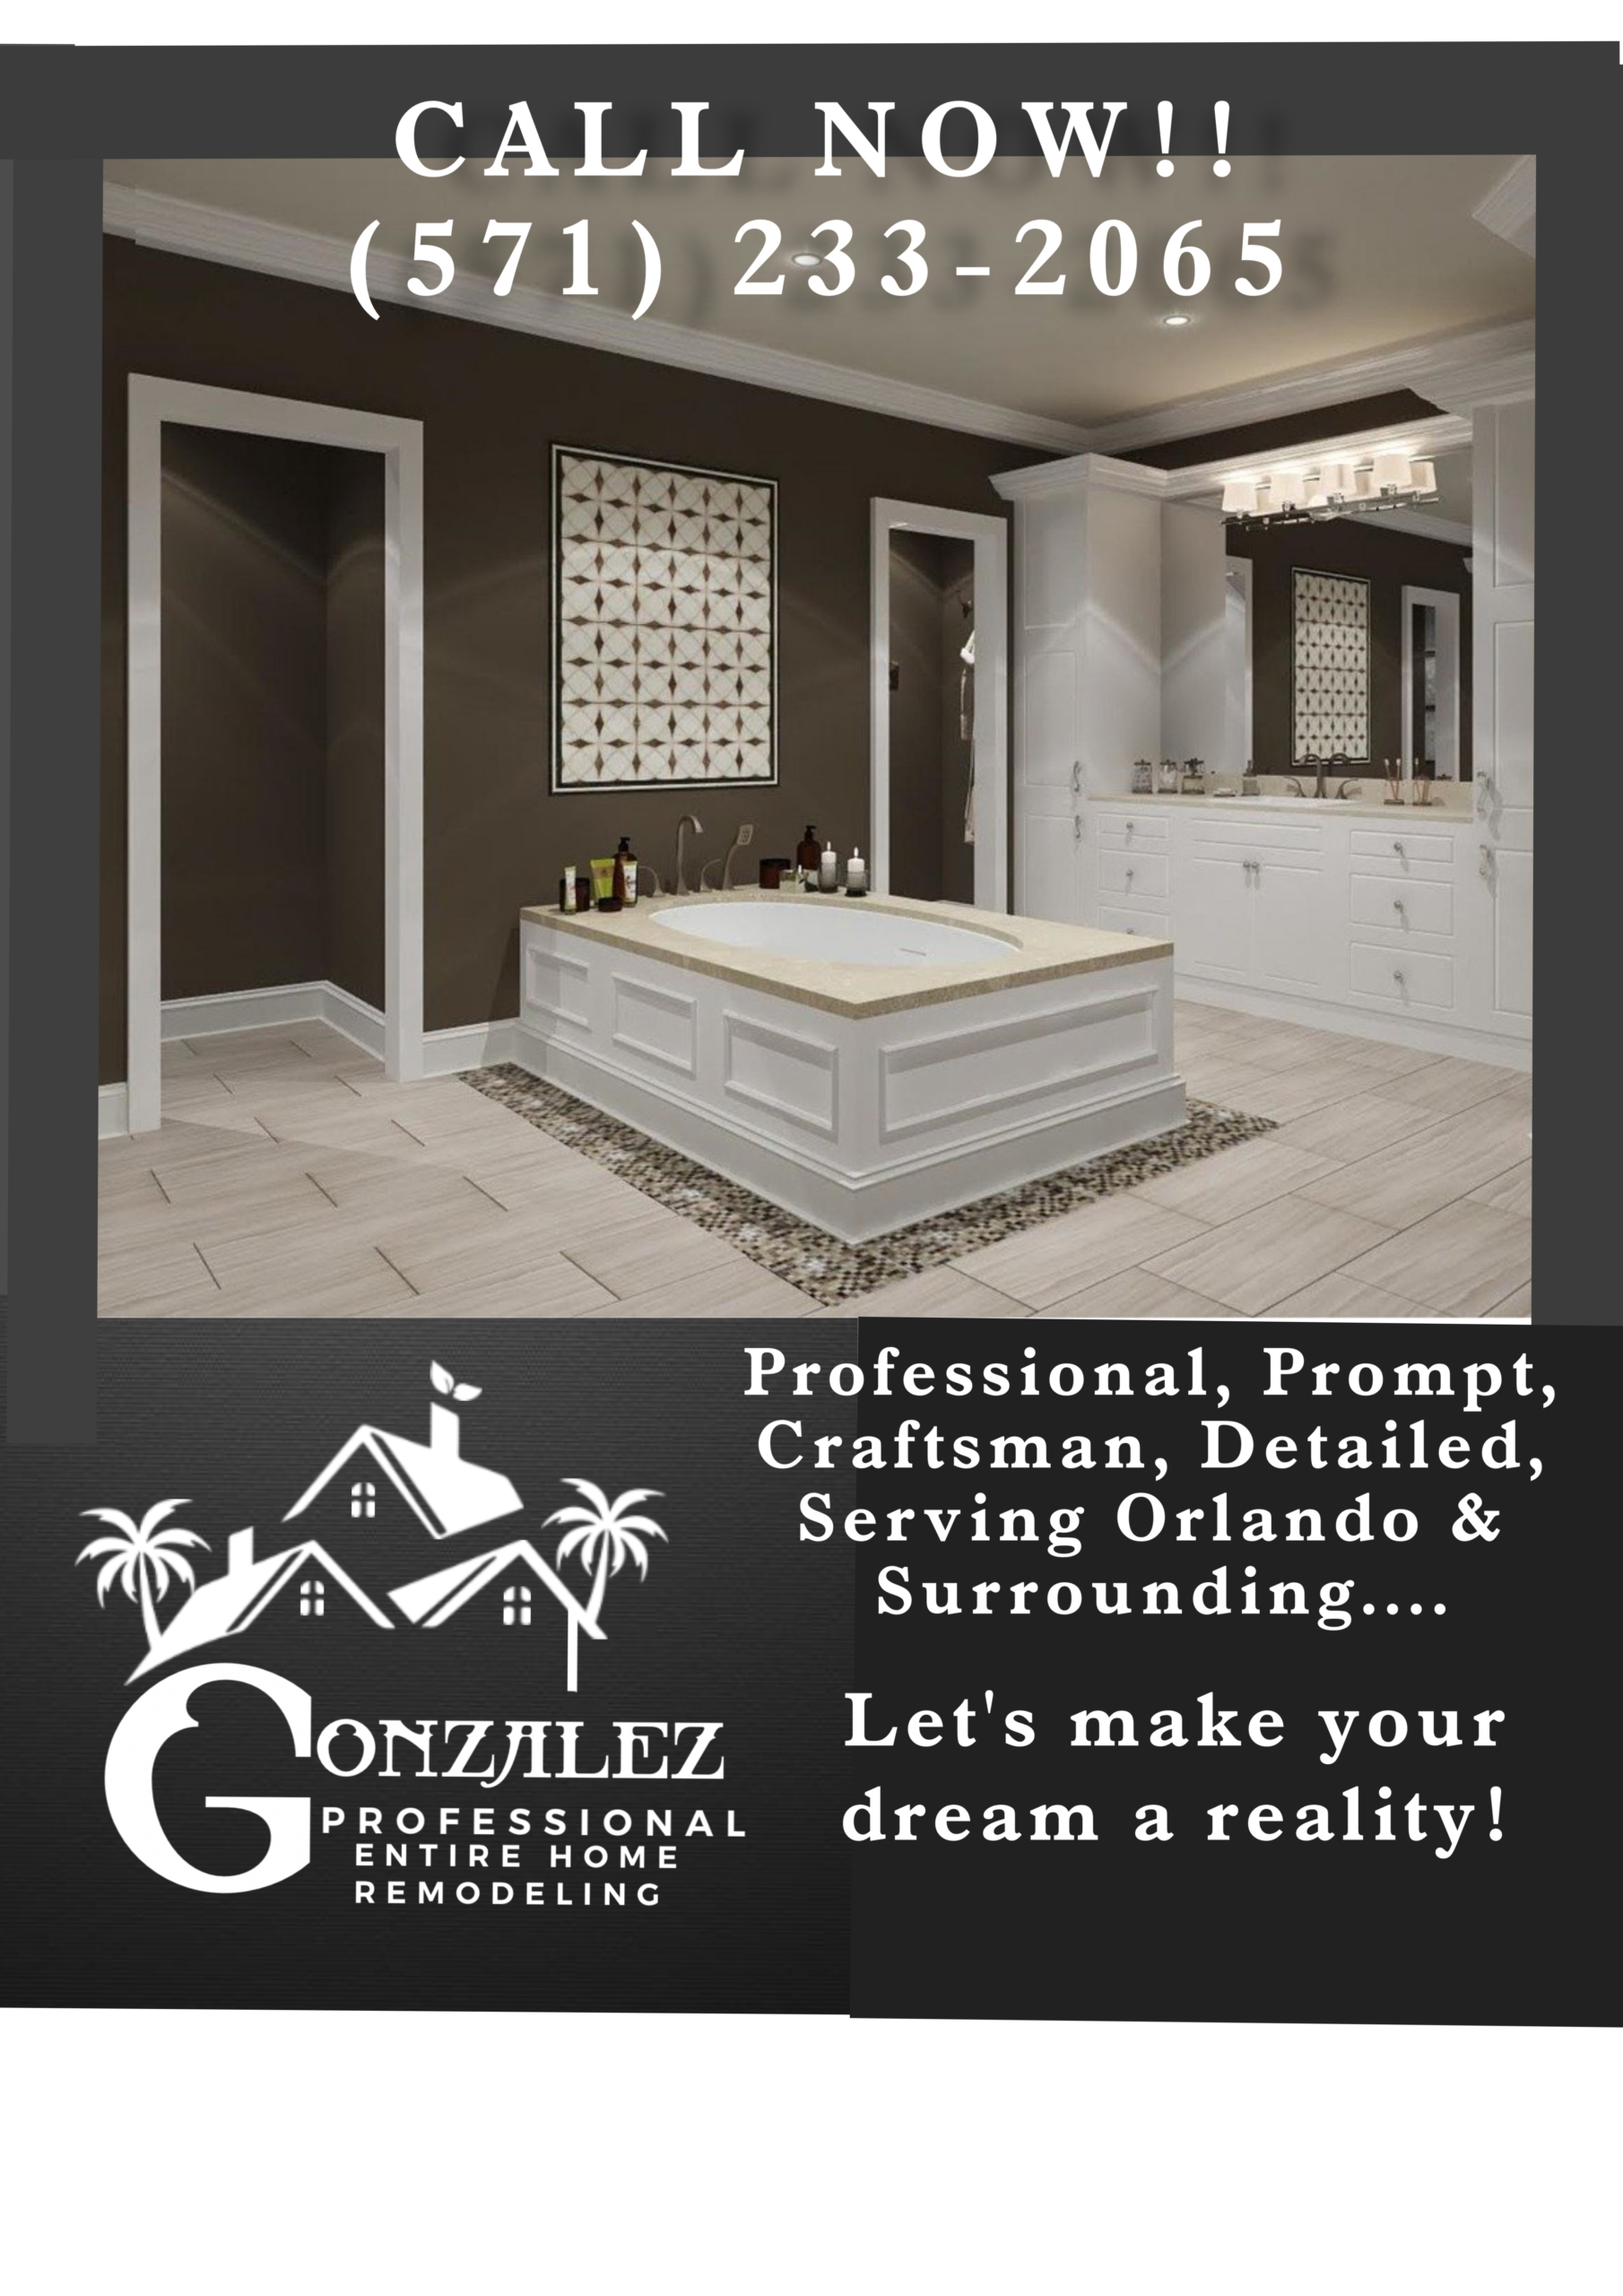 Gonzalez Professional Remodeling, LLC